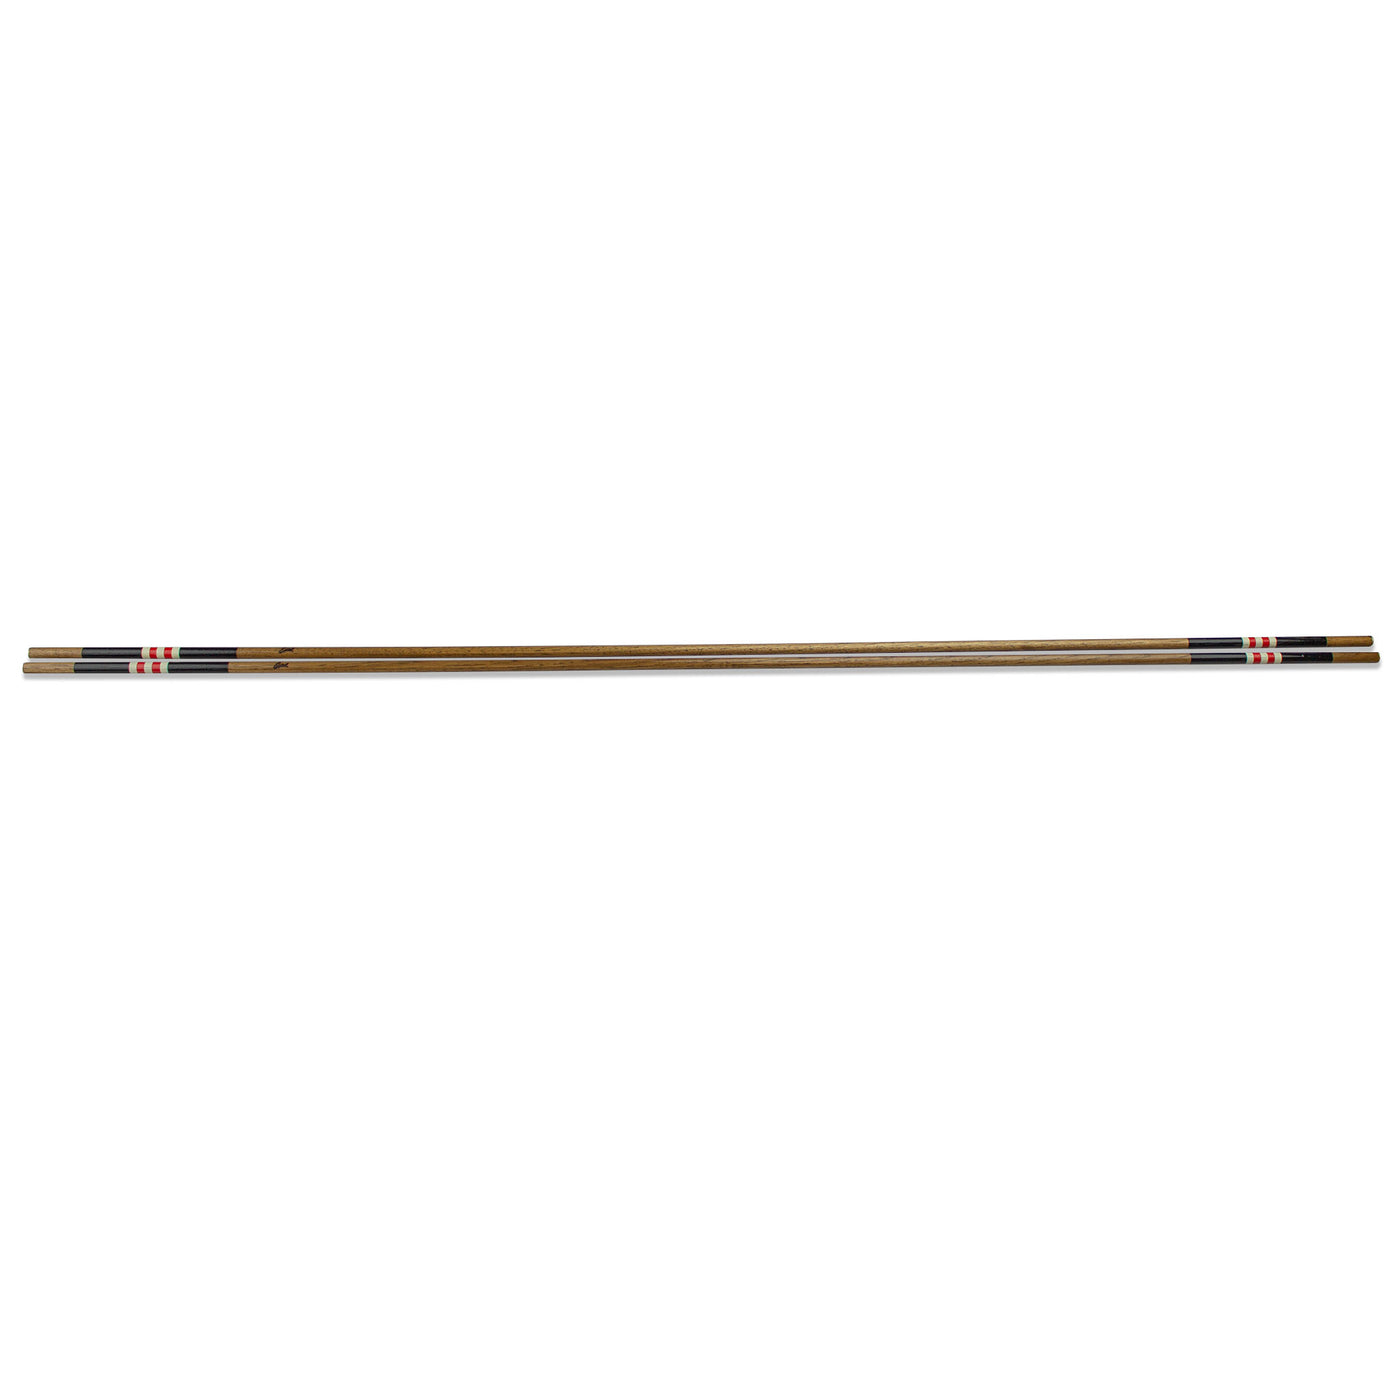 Edel Golf x BubbaWhips hickory alignment sticks